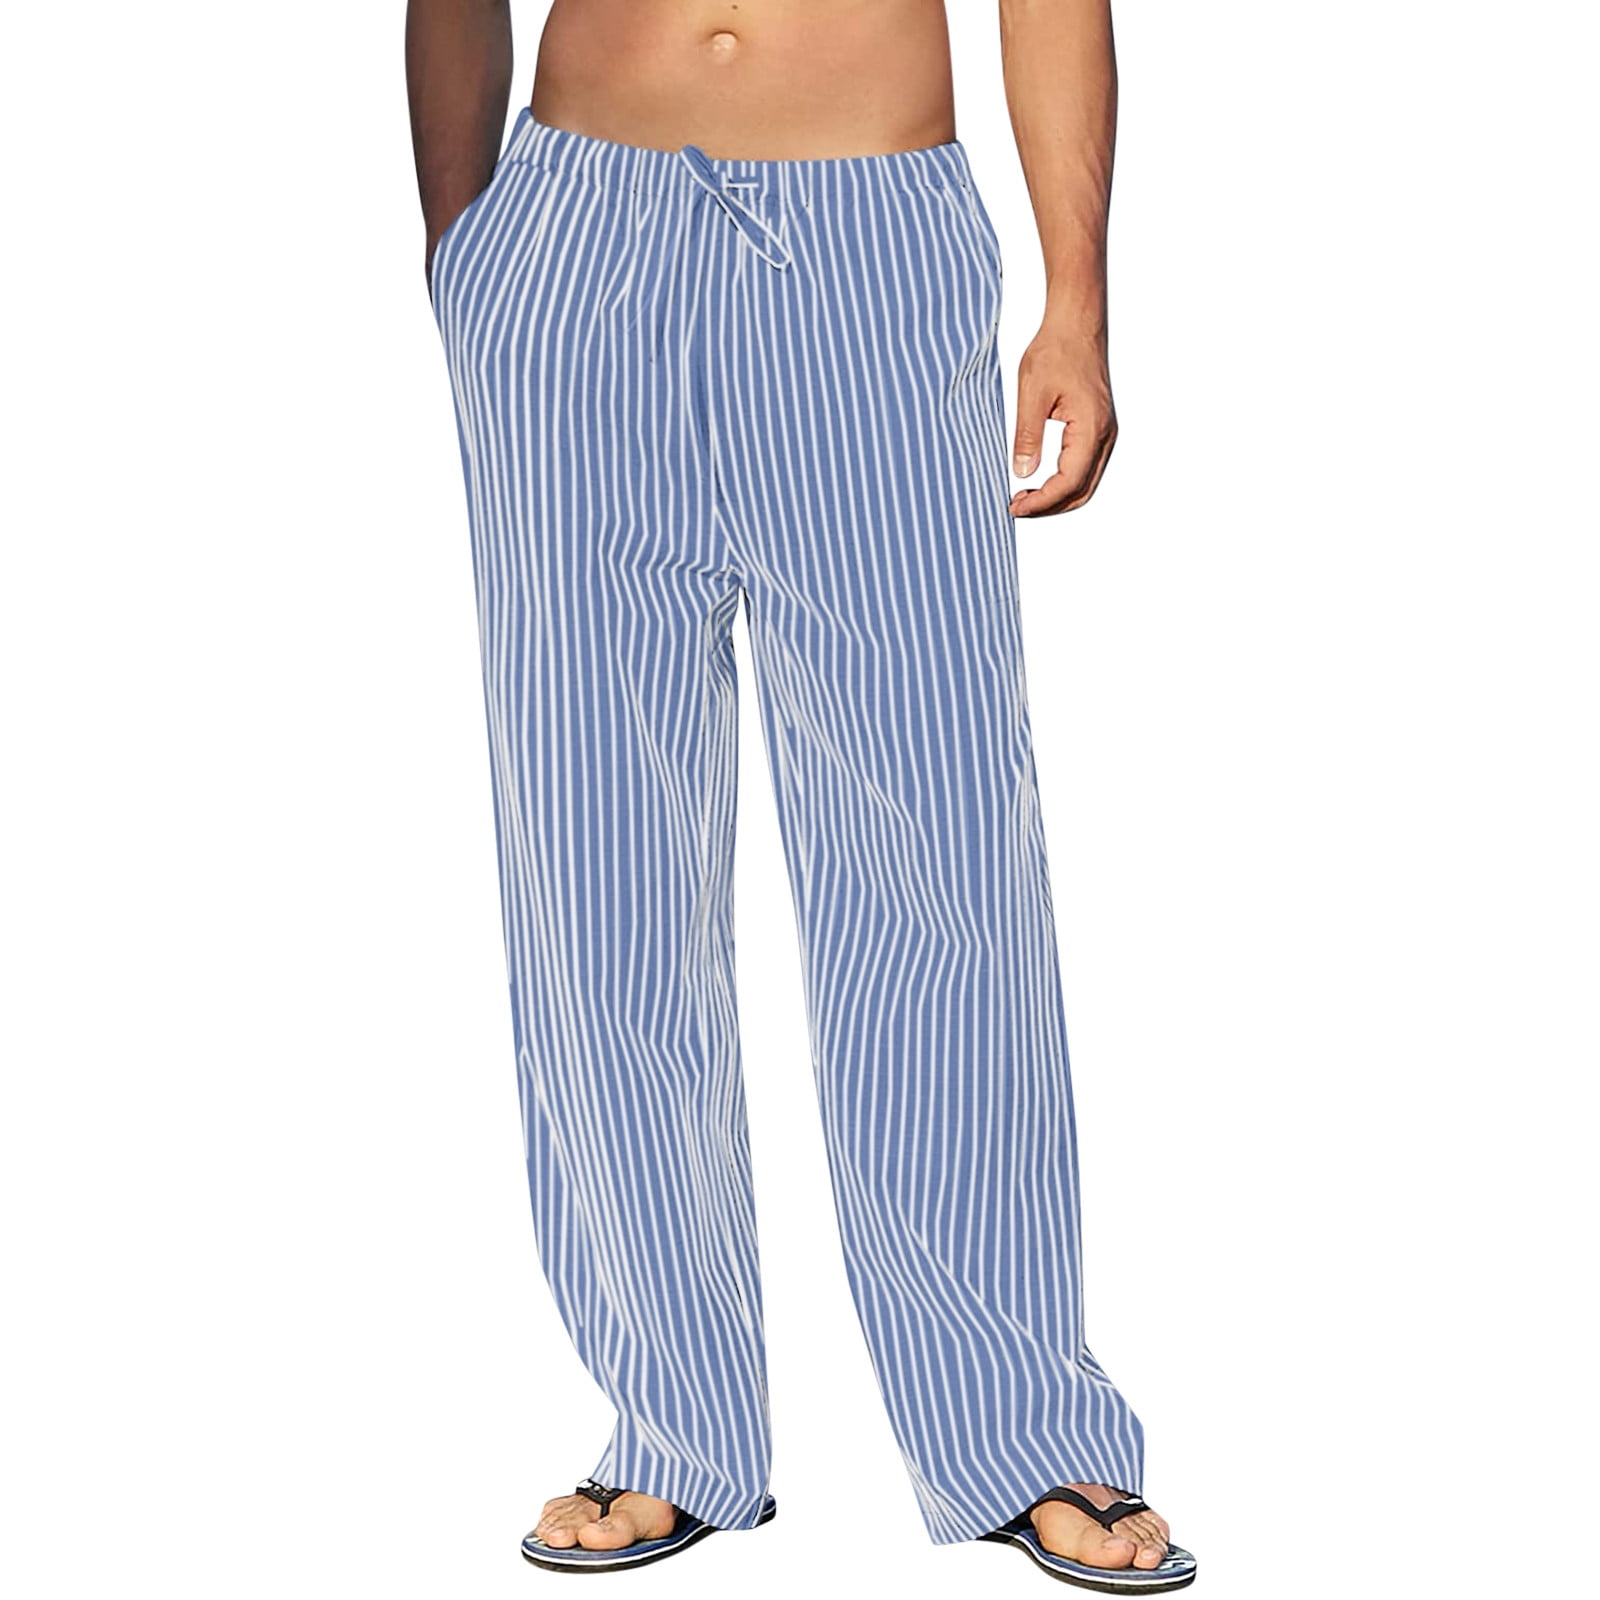 Eguiwyn cargo pants for men Stripe Print Trend Youth SweatFitness ...